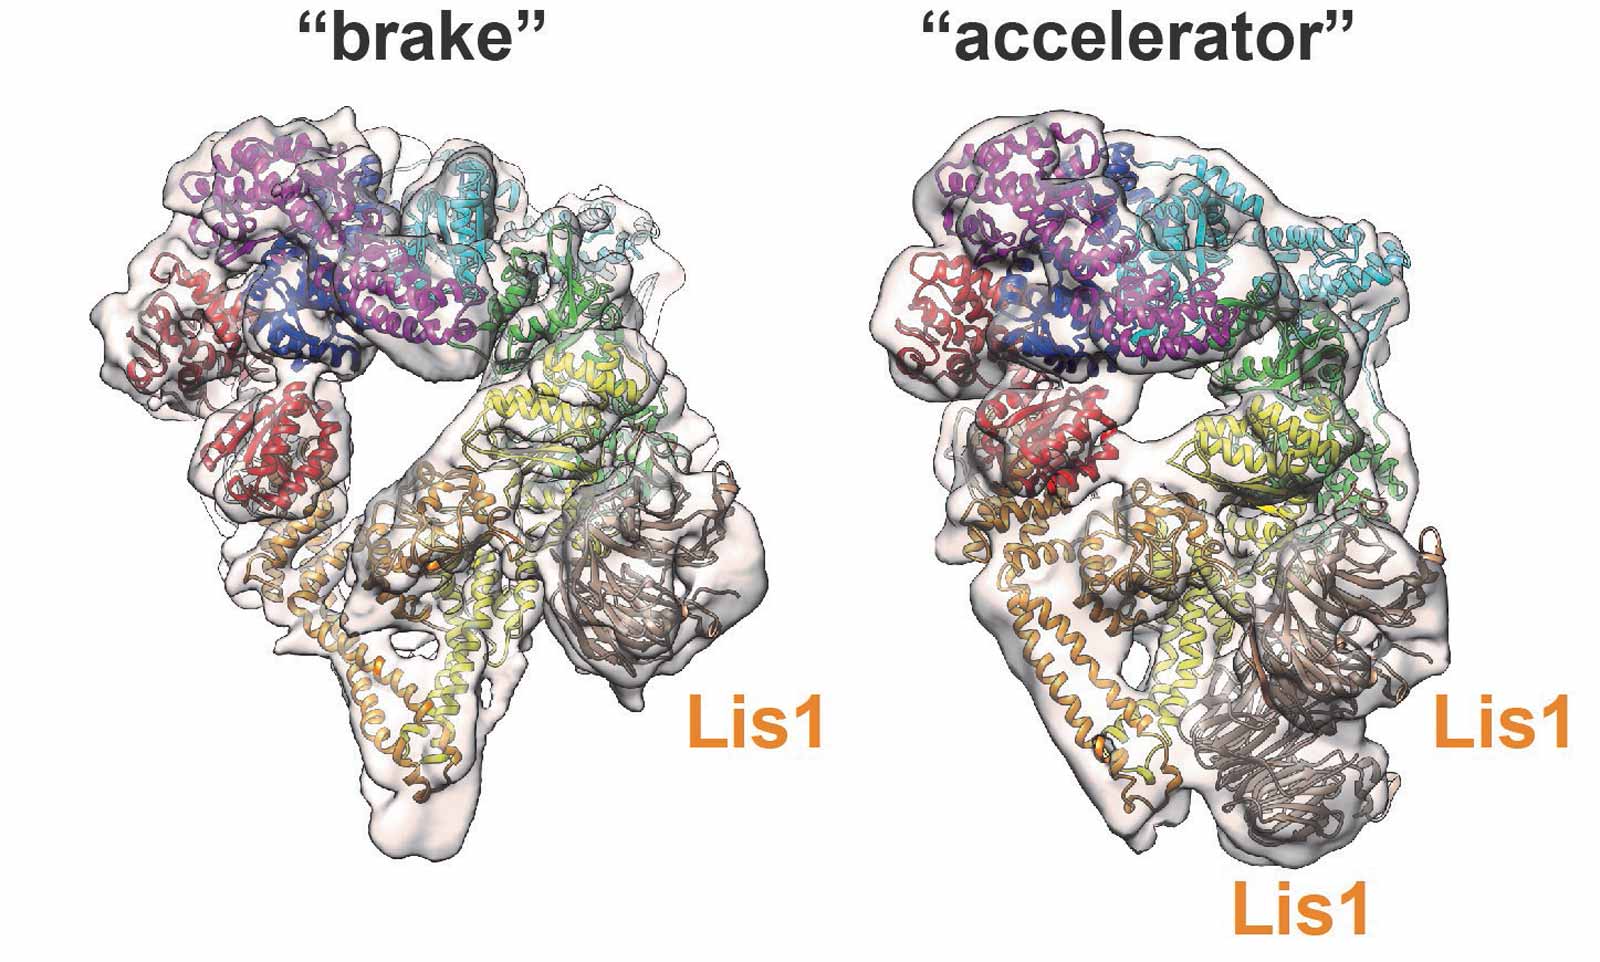 3D illustrative comparison of dynein structures